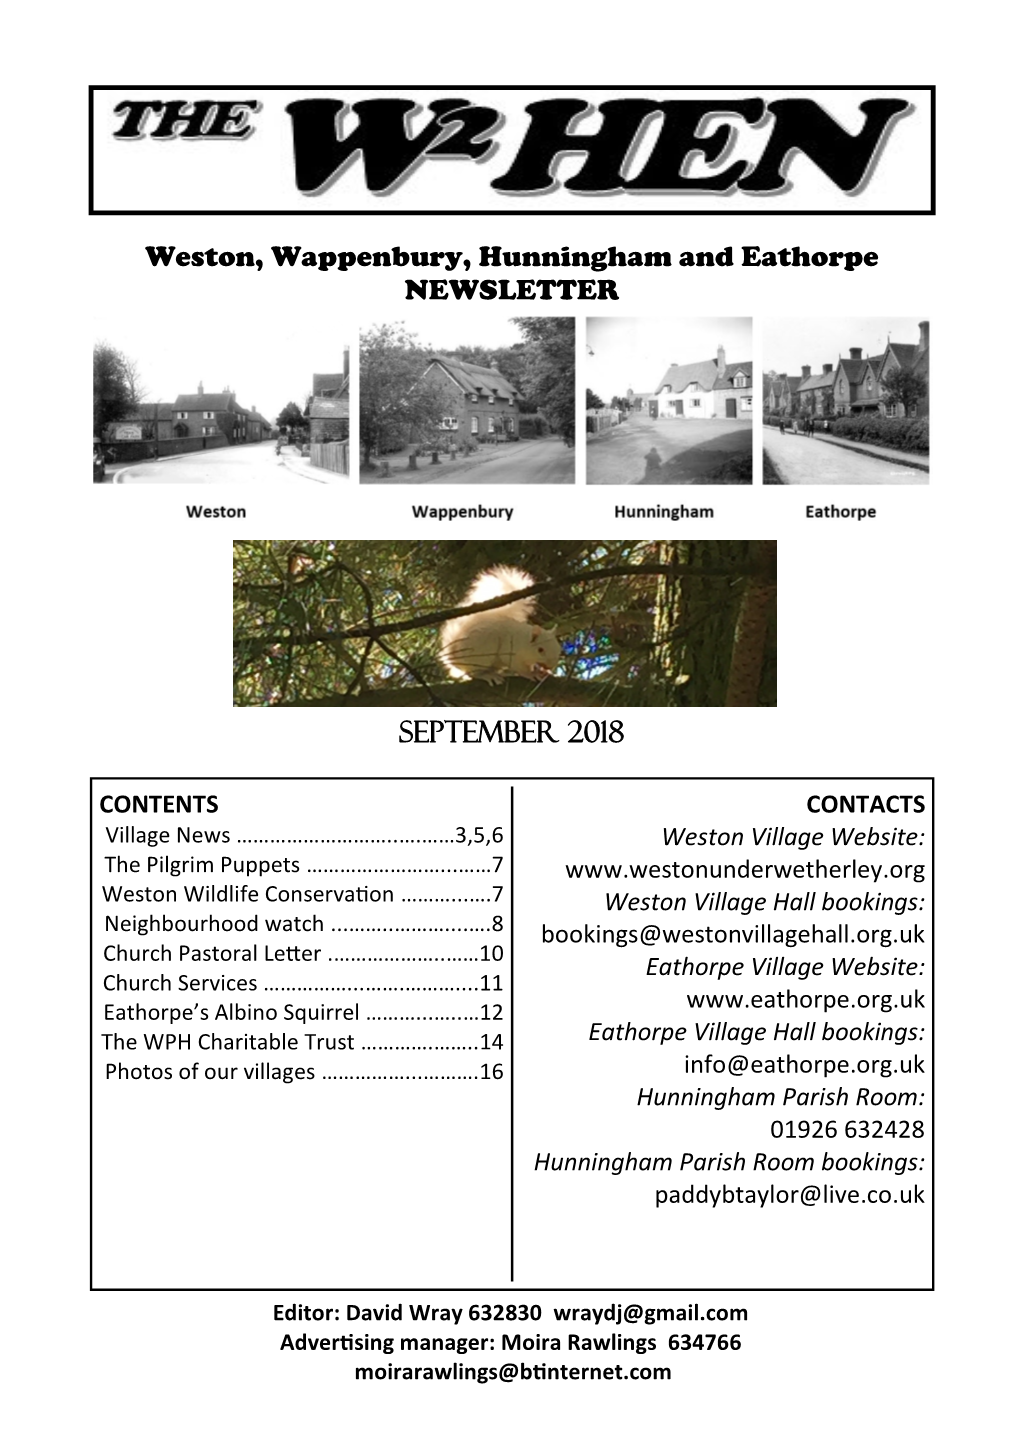 SEPTEMBER 2018 Weston, Wappenbury, Hunningham And